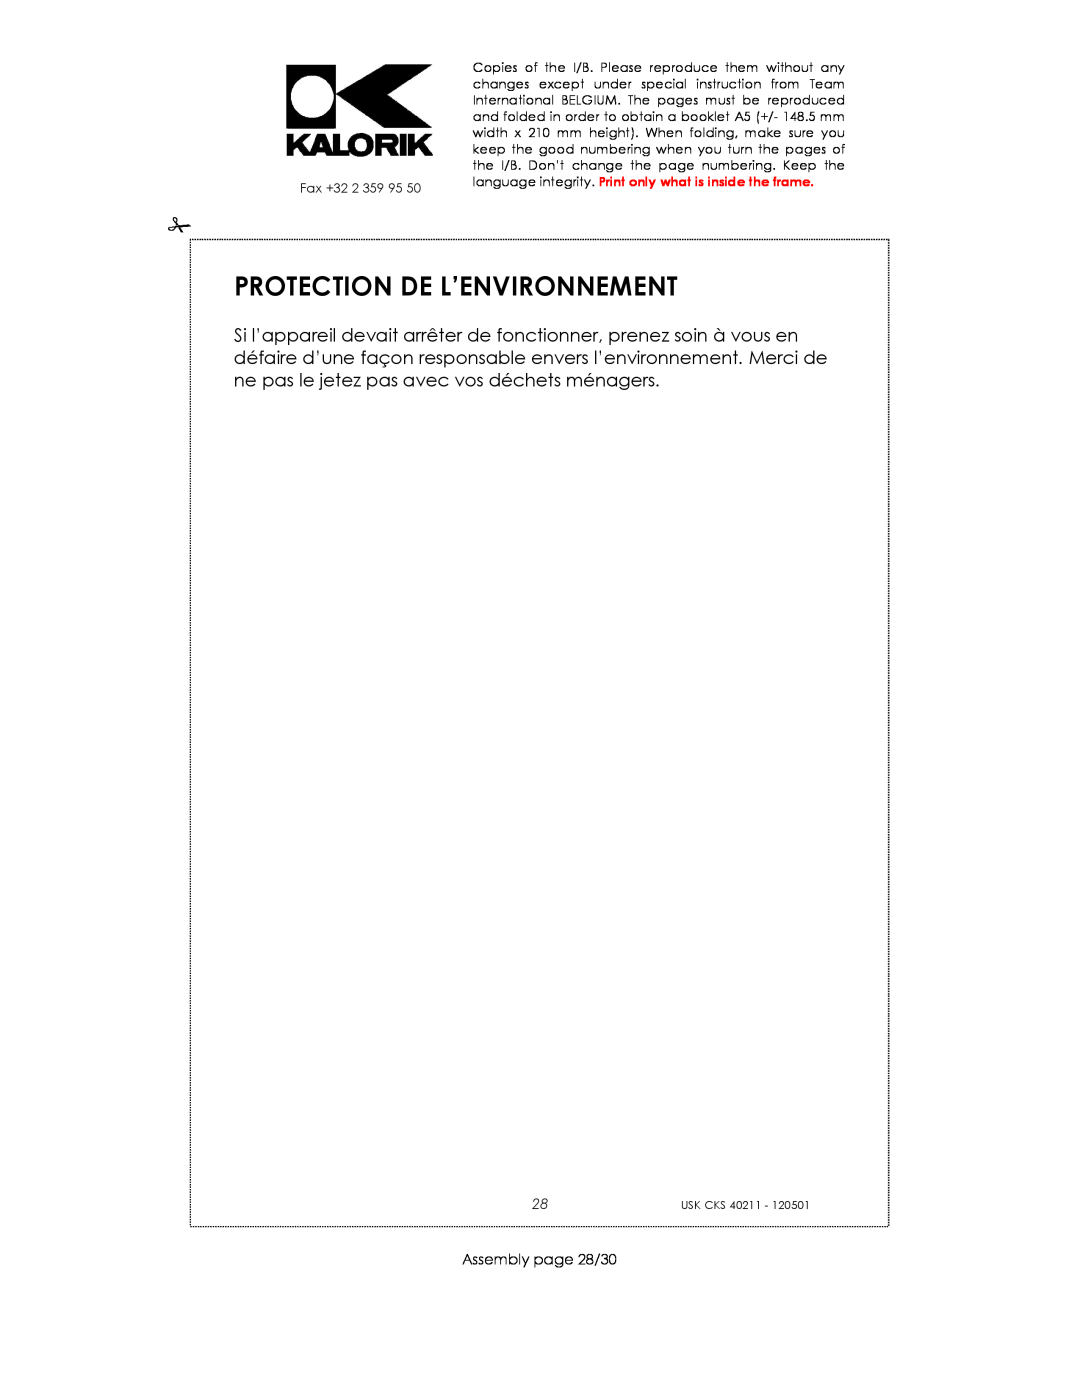 Kalorik CKS 40211 manual Protection De L’Environnement, Assembly page 28/30 